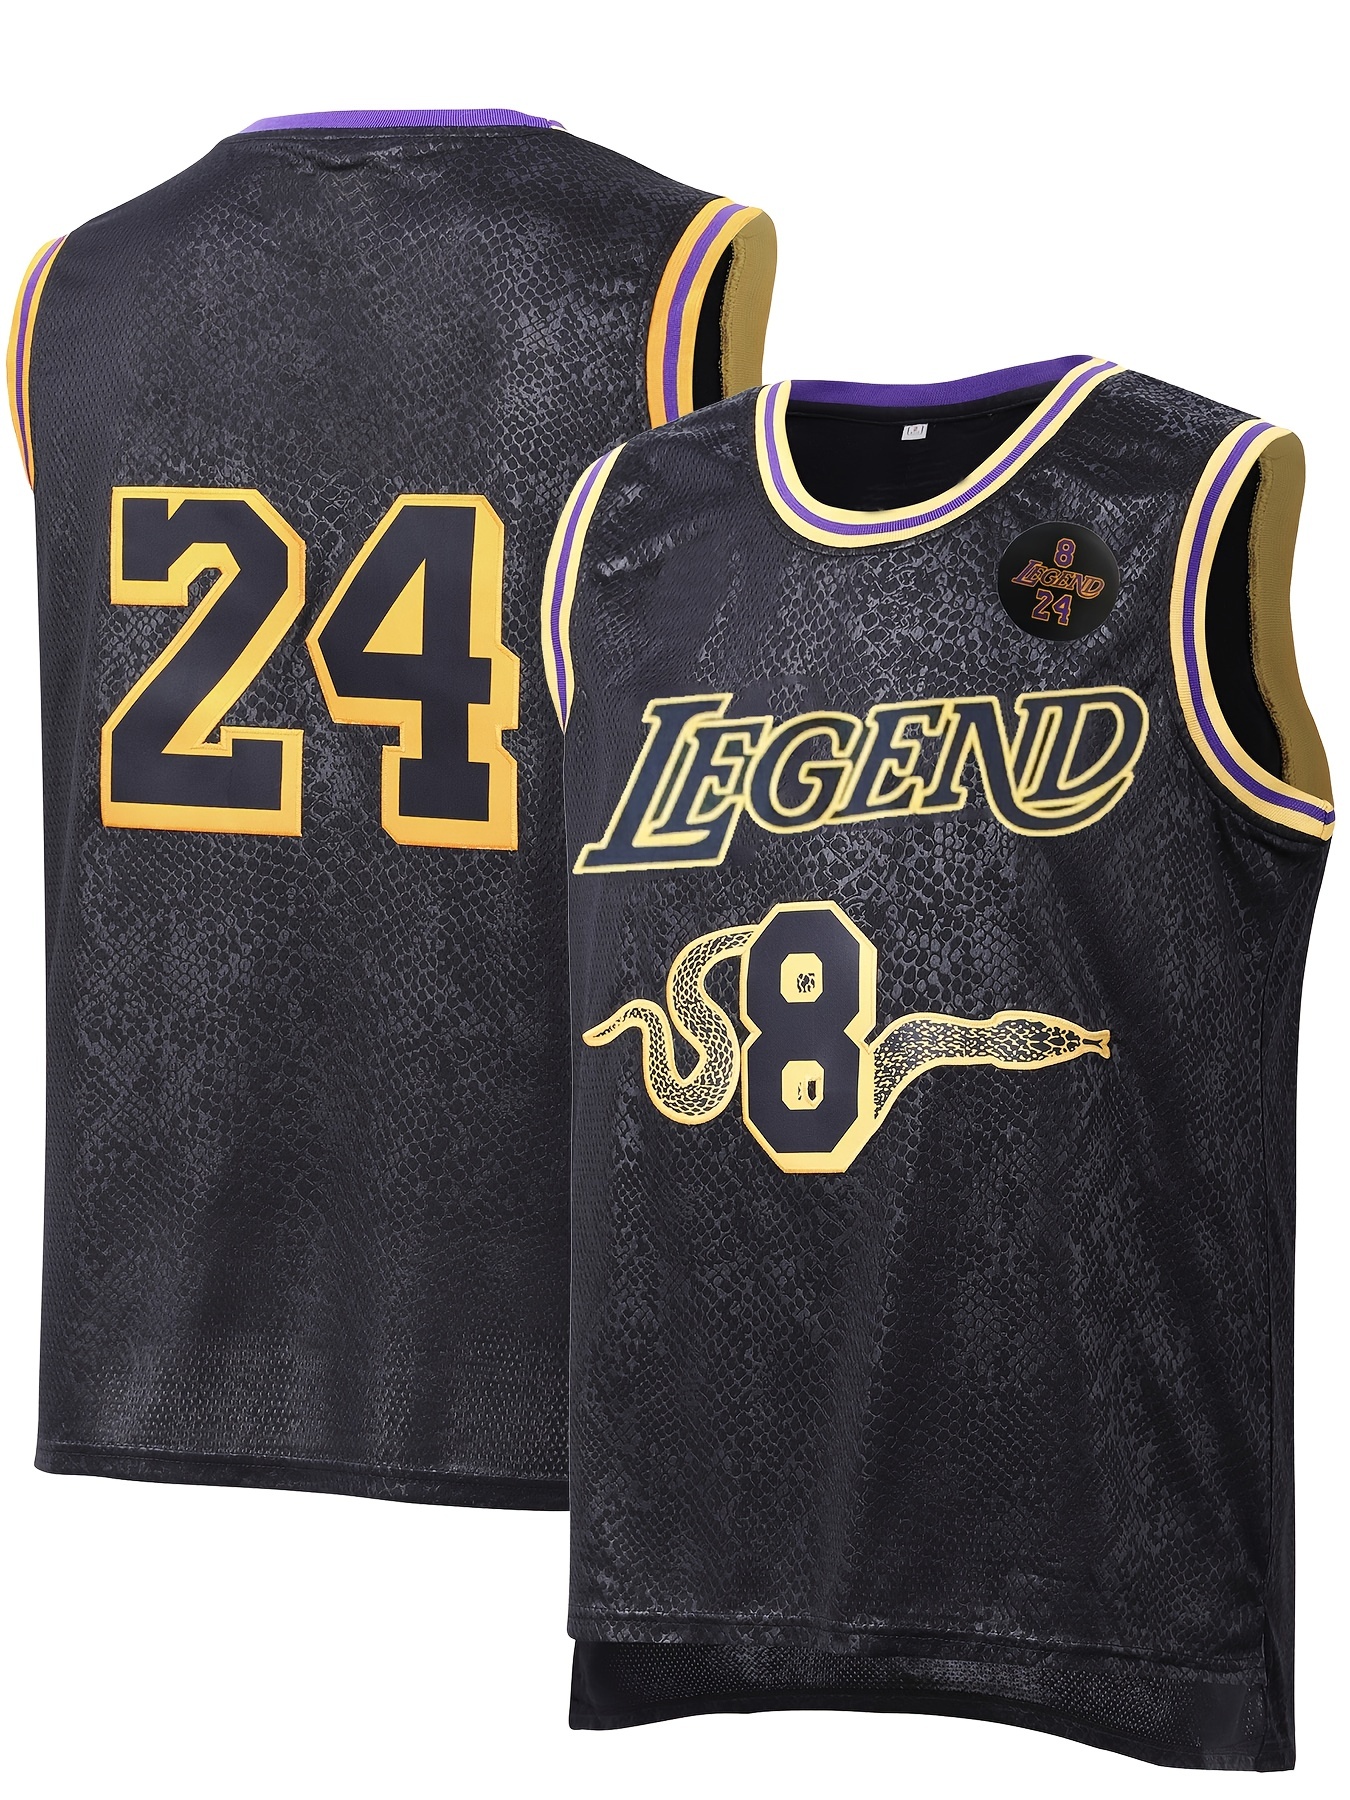 Lebron Lakers Jersey Men, Mamba Comfortable Sleeveless Vest, Black Gold 23#  Top (S-XXL)-Large : : Sports, Fitness & Outdoors